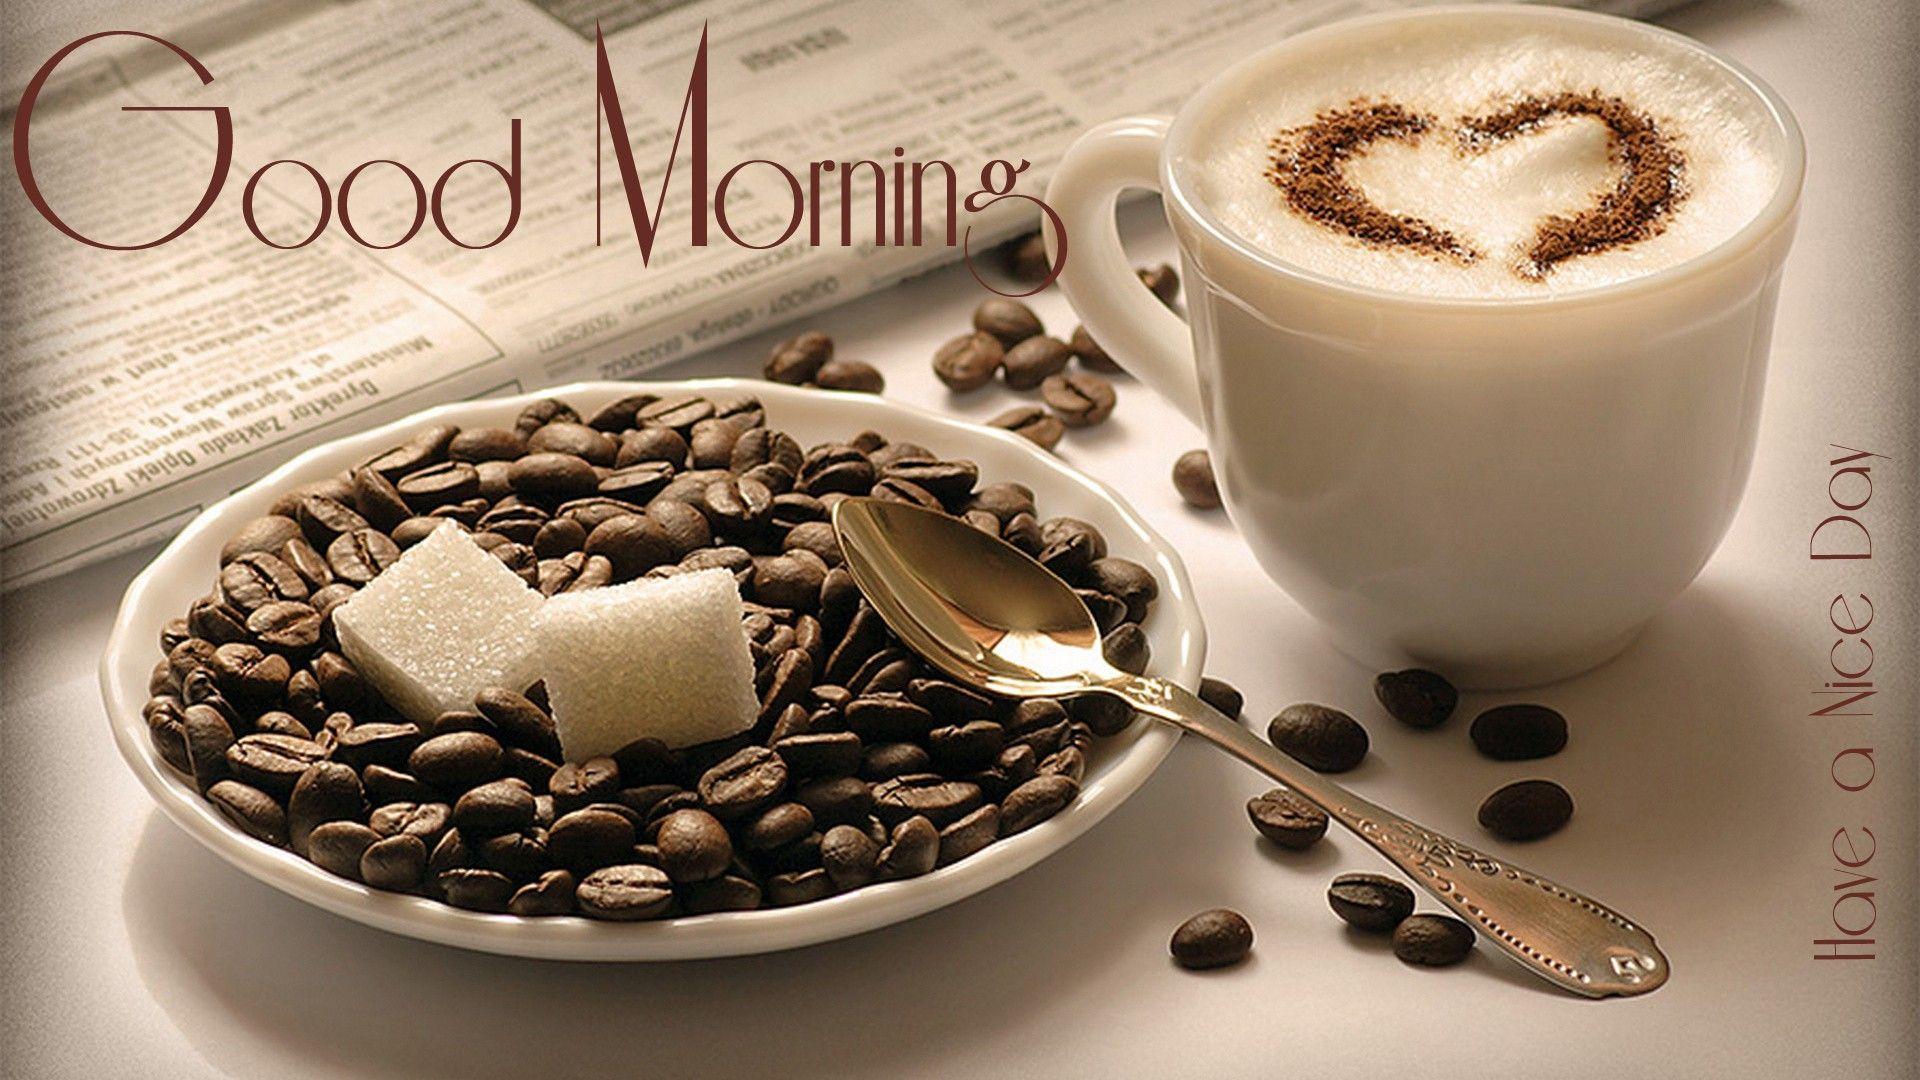 good morning coffee mug image. Good morning good morning cup of coffee